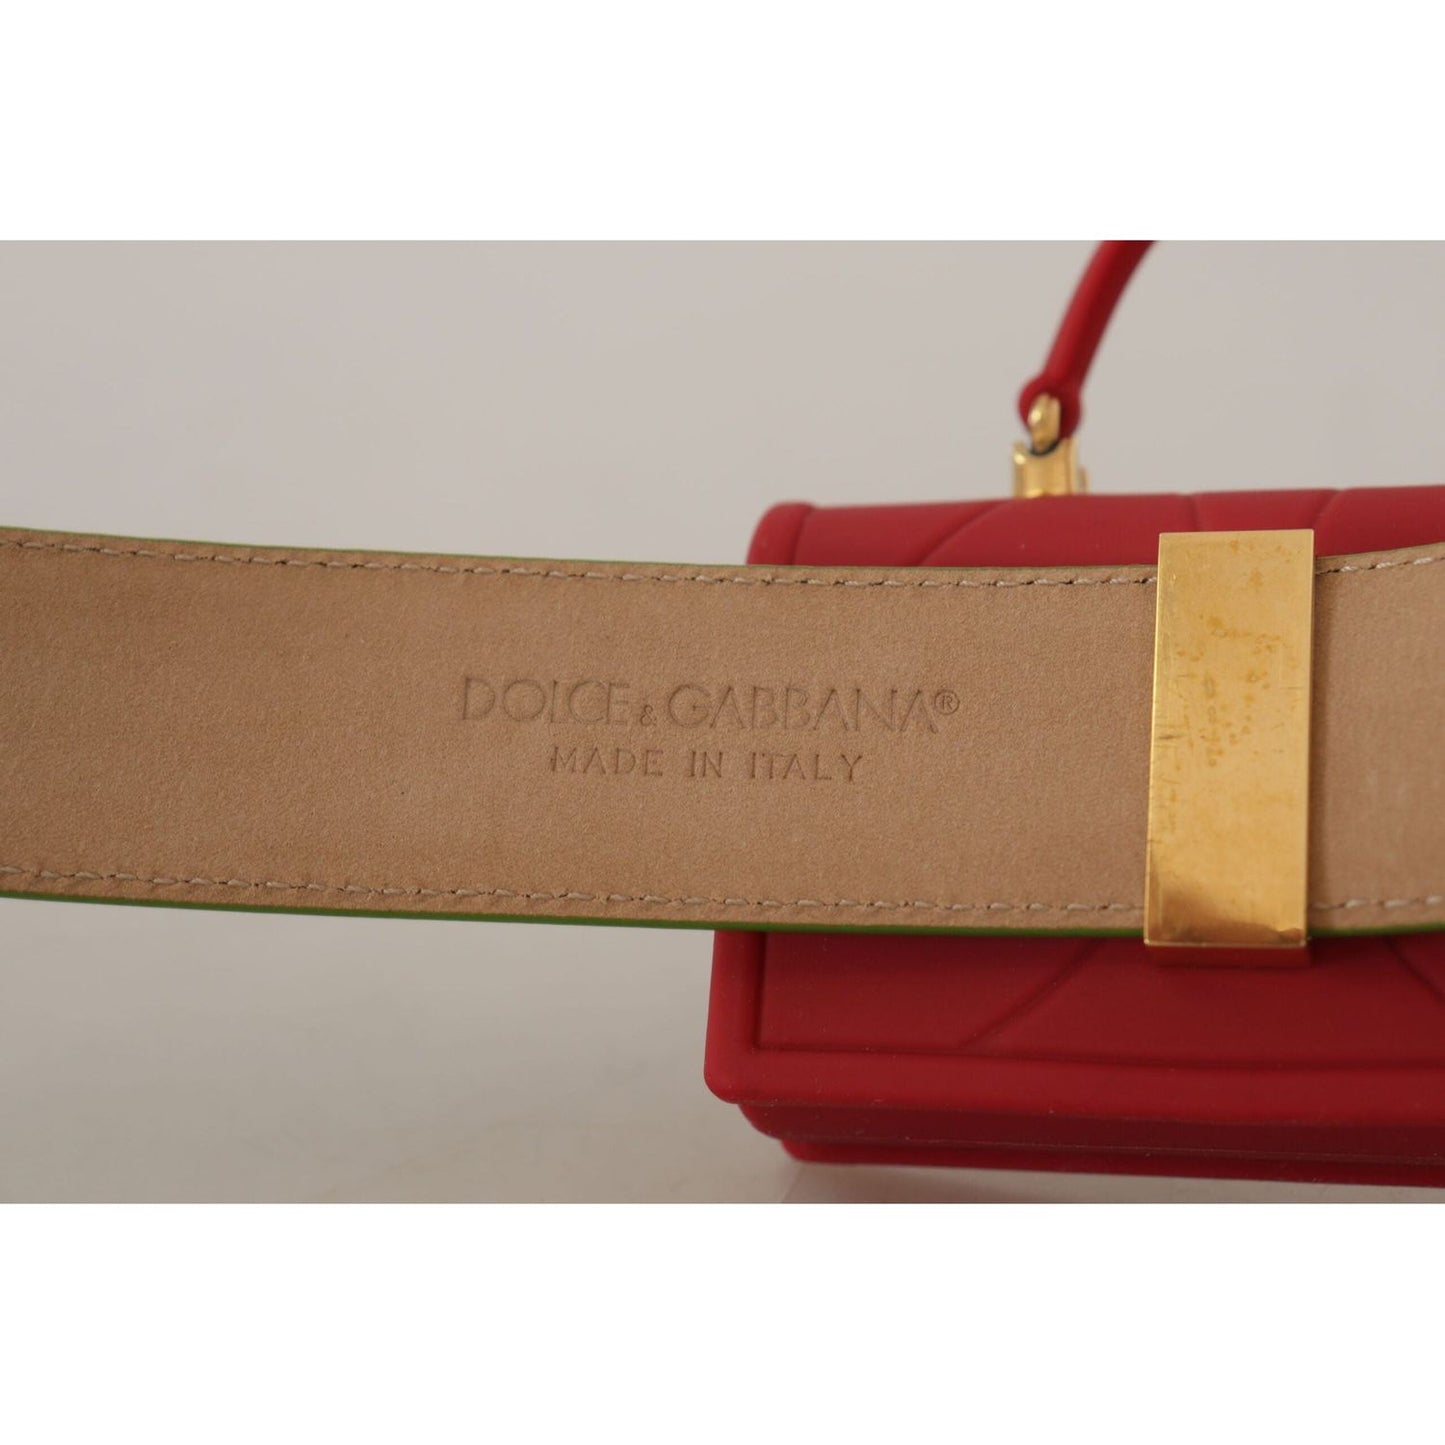 Dolce & Gabbana Elegant Leather Belt with Mini Bag Accessory green-leather-devotion-heart-micro-bag-headphones-belt IMG_9069-scaled-16d26f38-98a.jpg